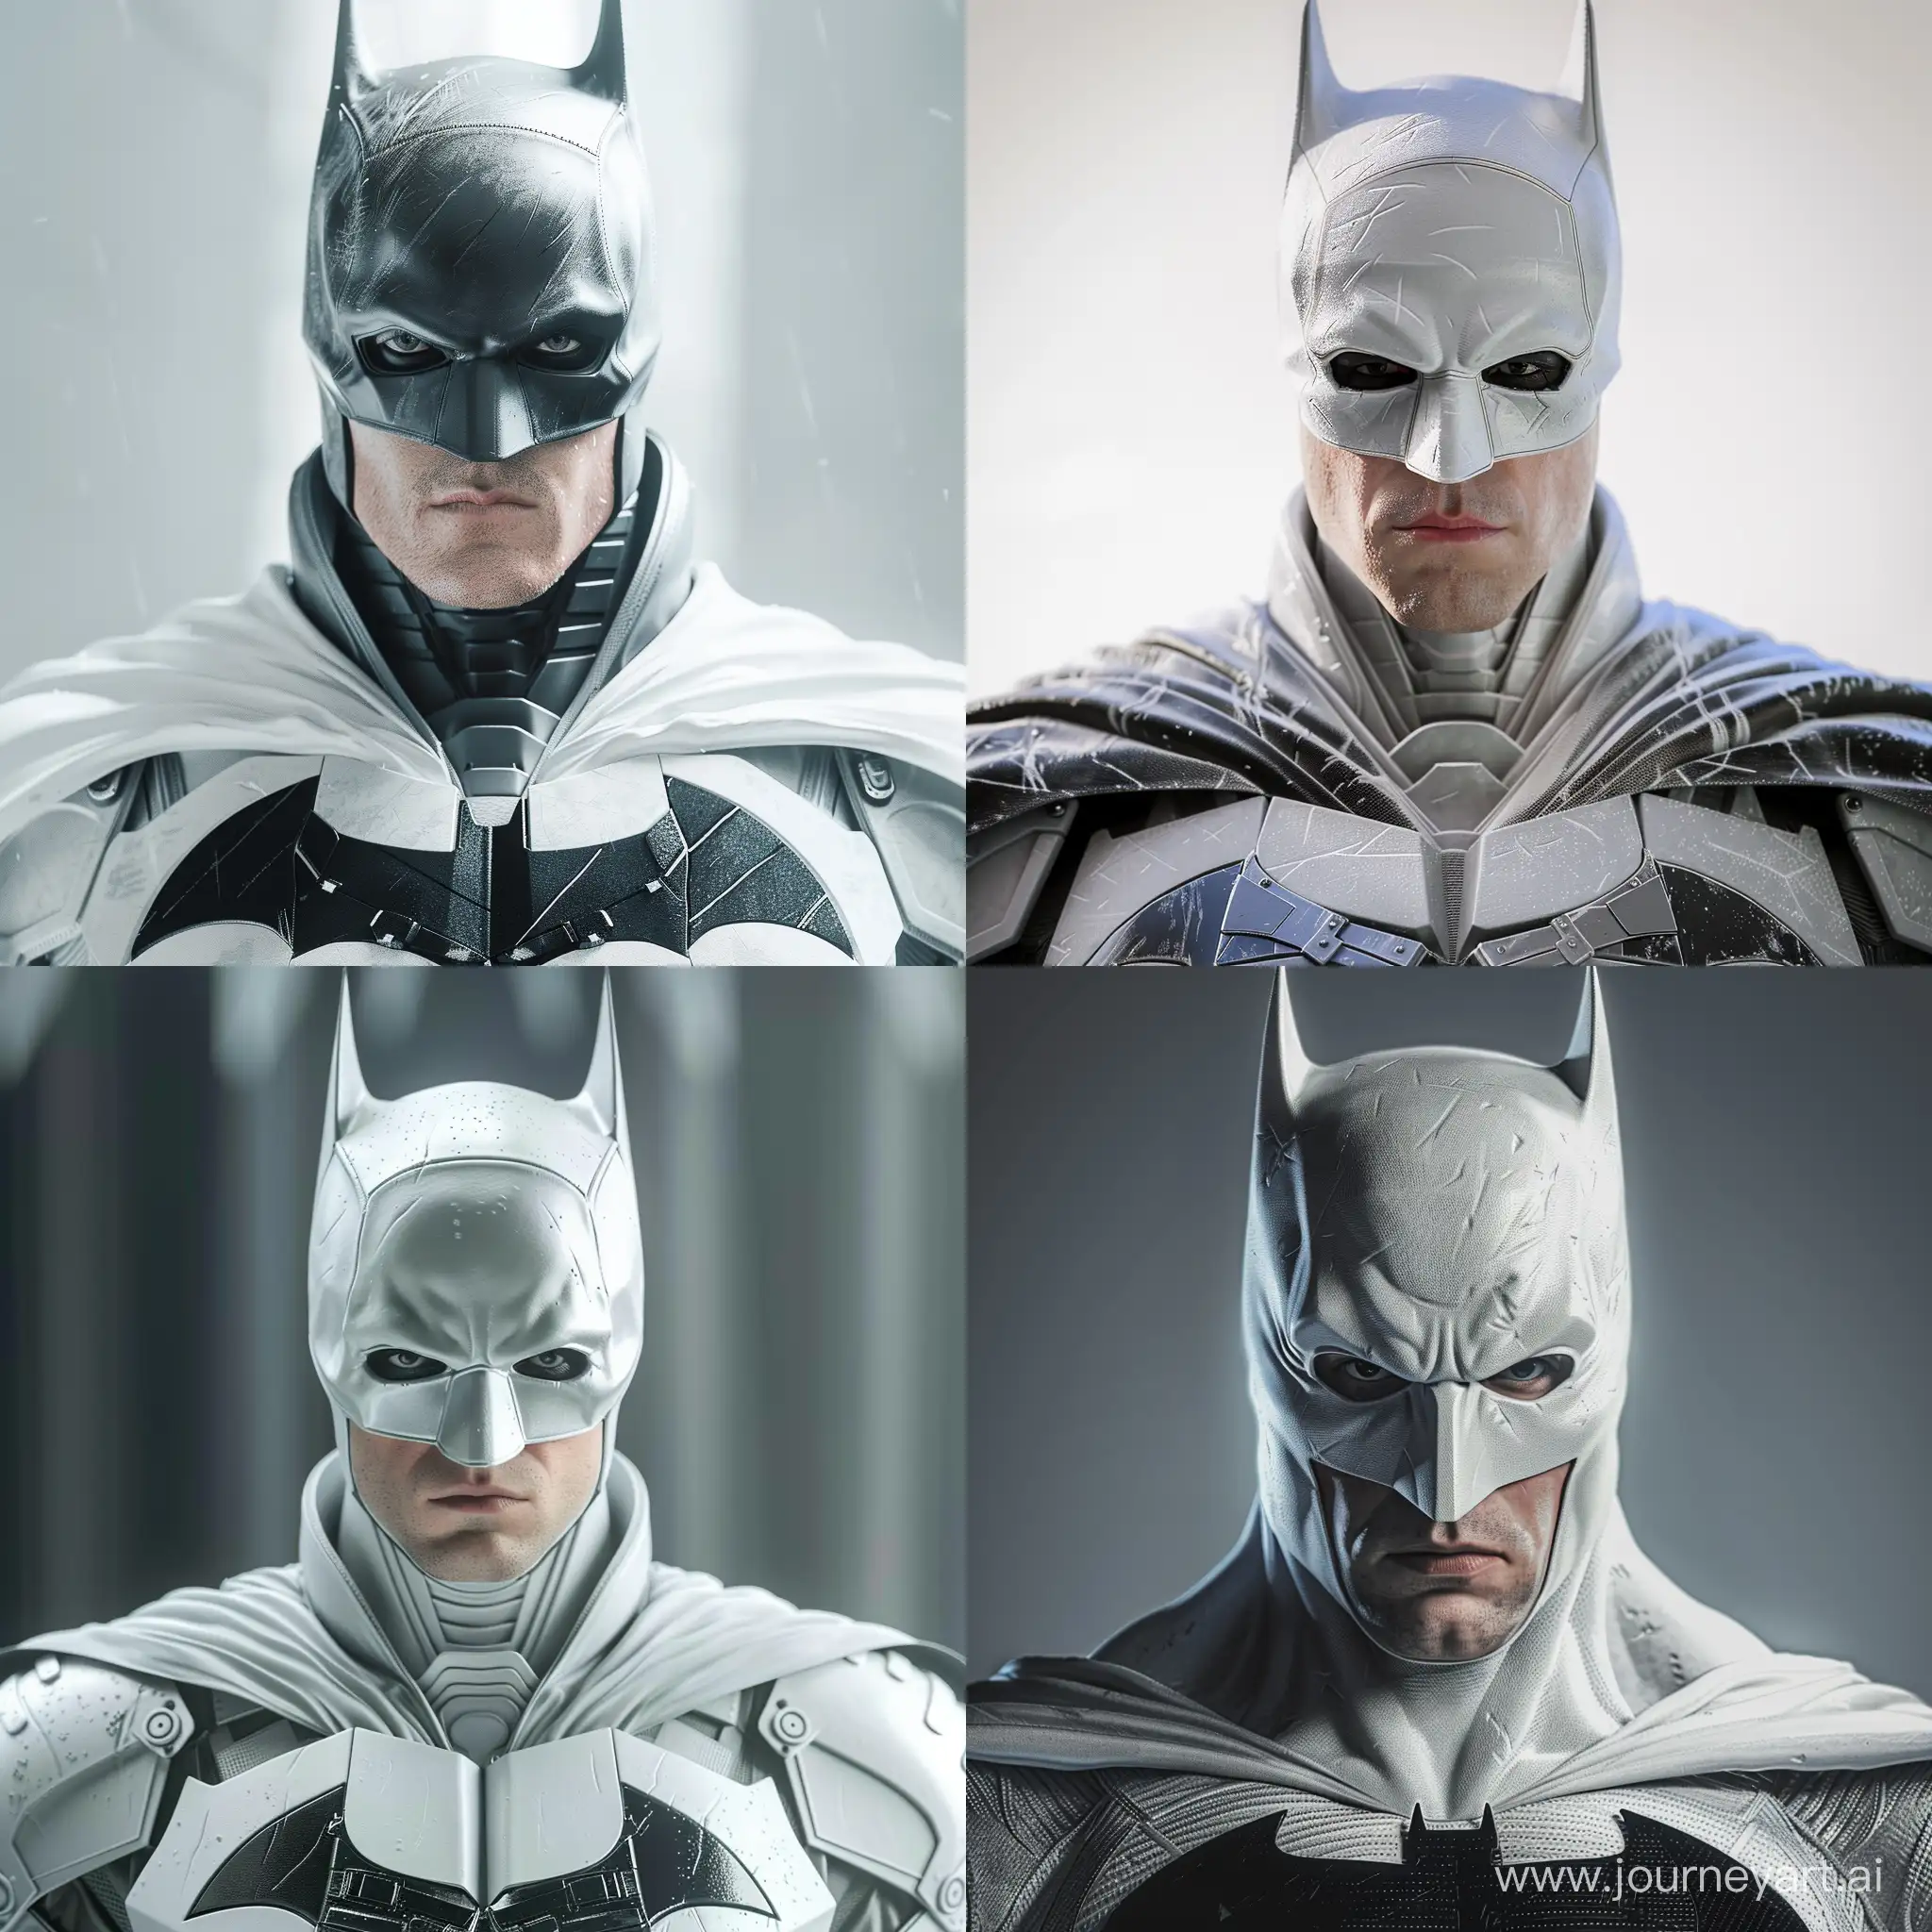 Christian-Bale-as-Batman-UltraRealistic-8K-UHD-High-Resolution-Portrait